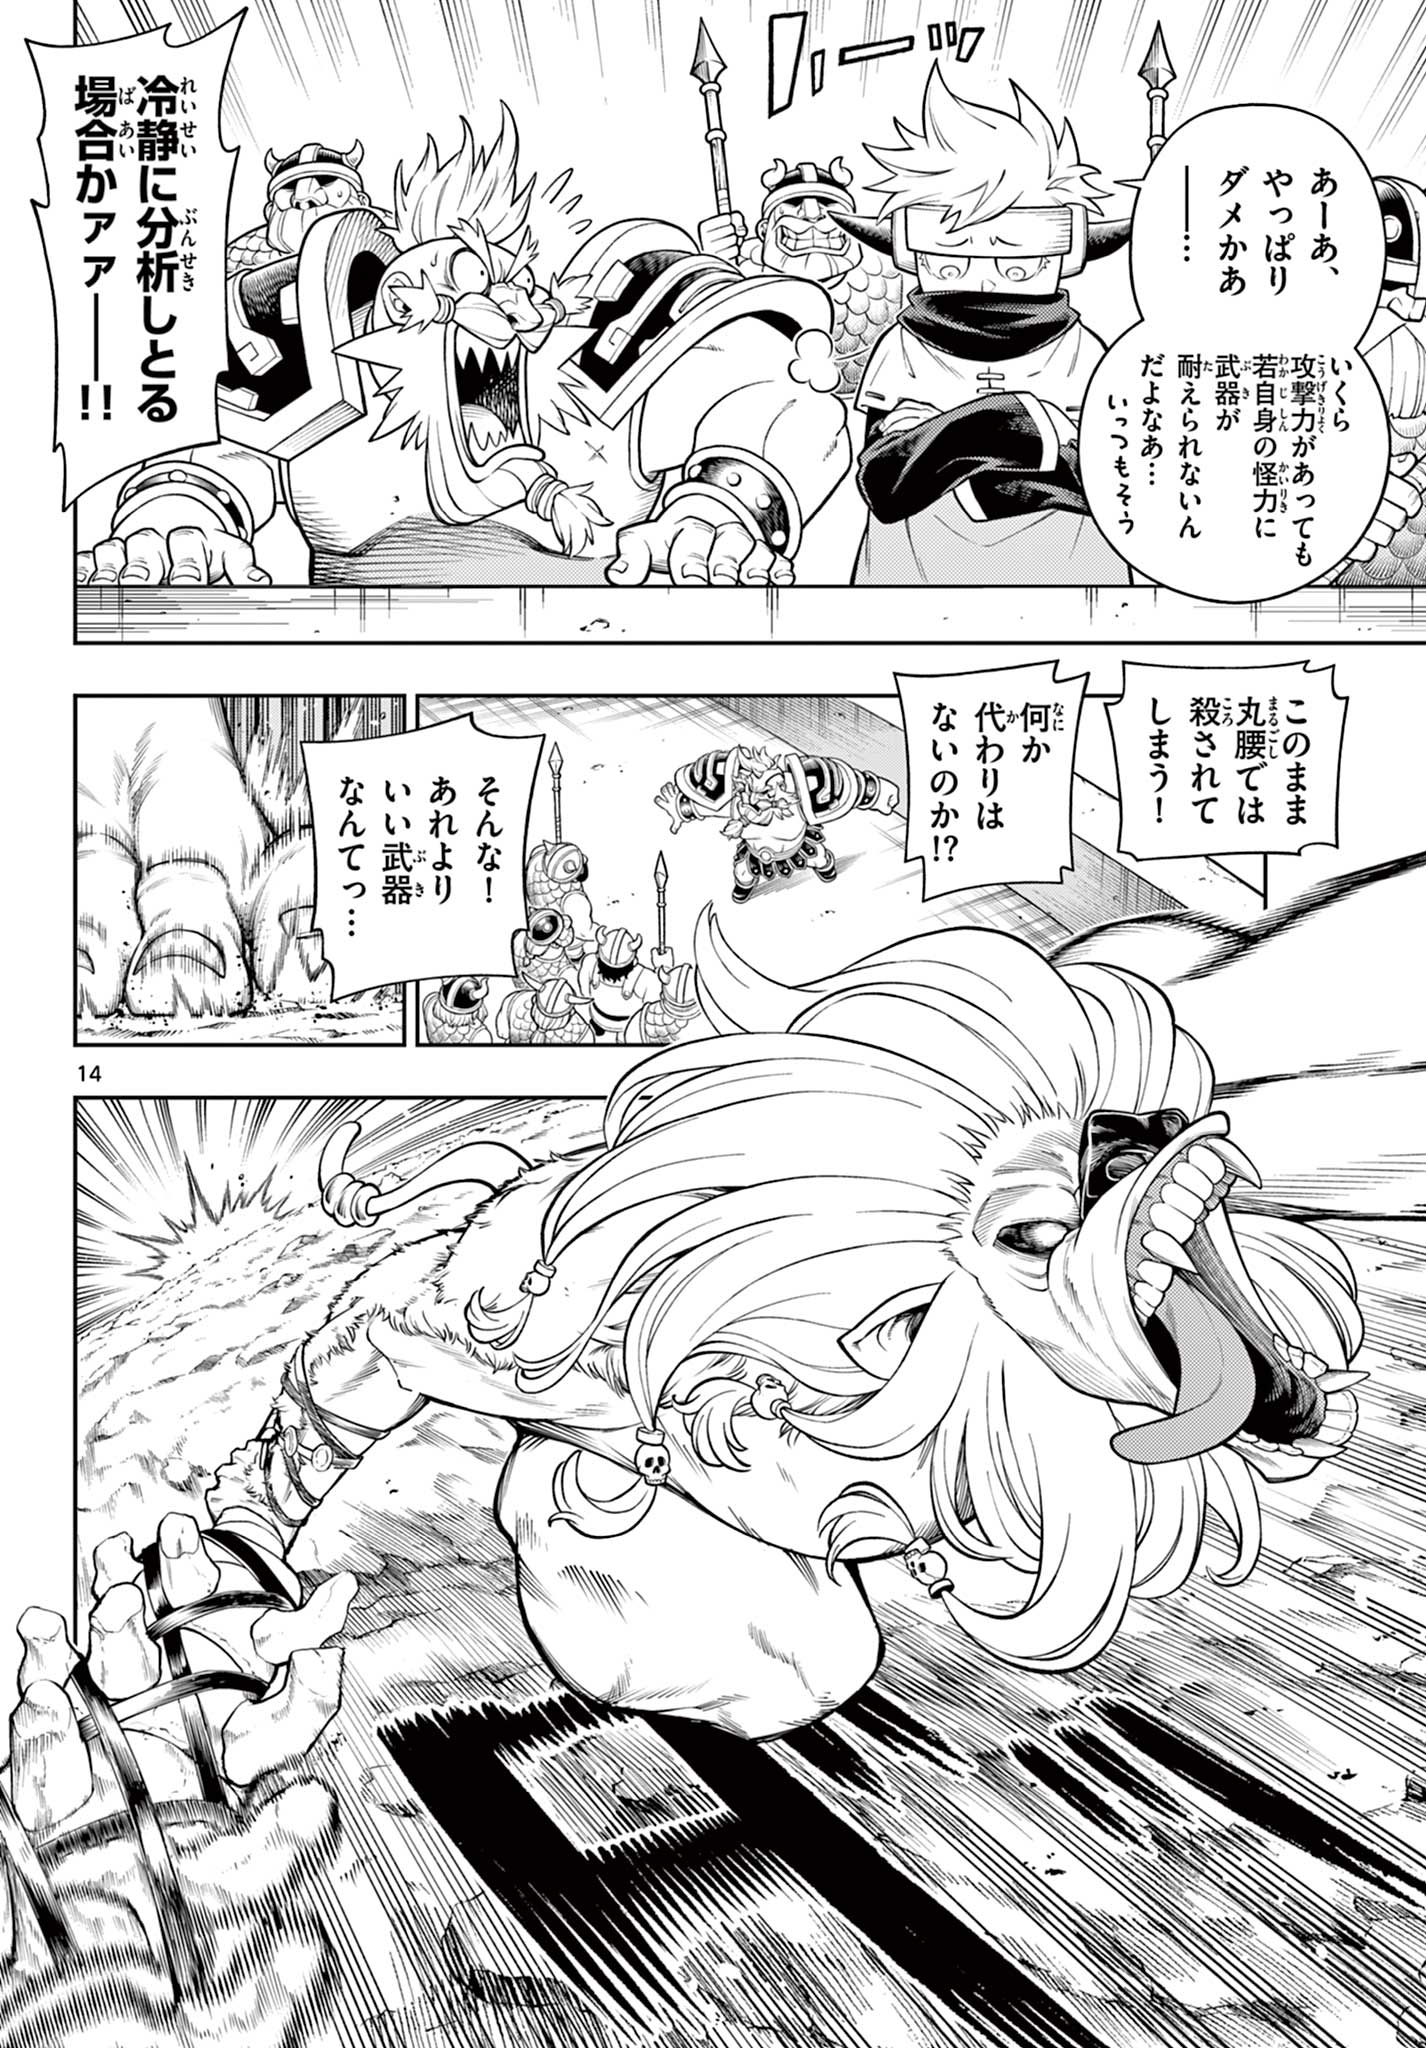 Soara to Mamono no ie - Chapter 24 - Page 14